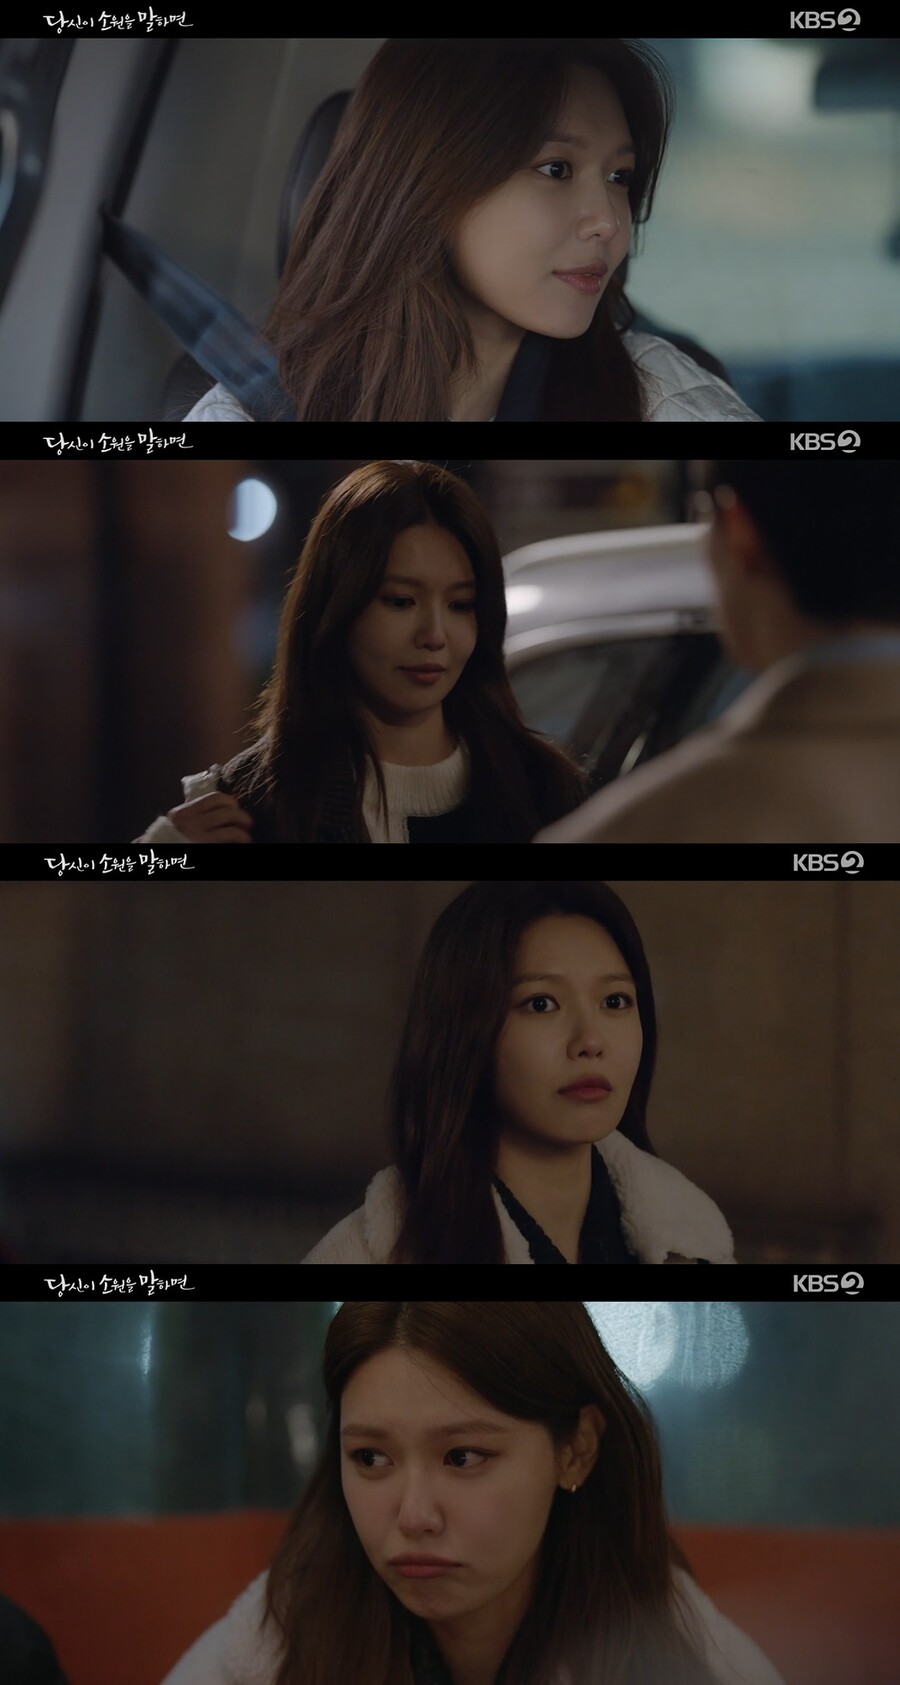 ▲ KBS2 수목드라마 '당신이 소원을 말하면' 배우 최수영. 제공| KBS